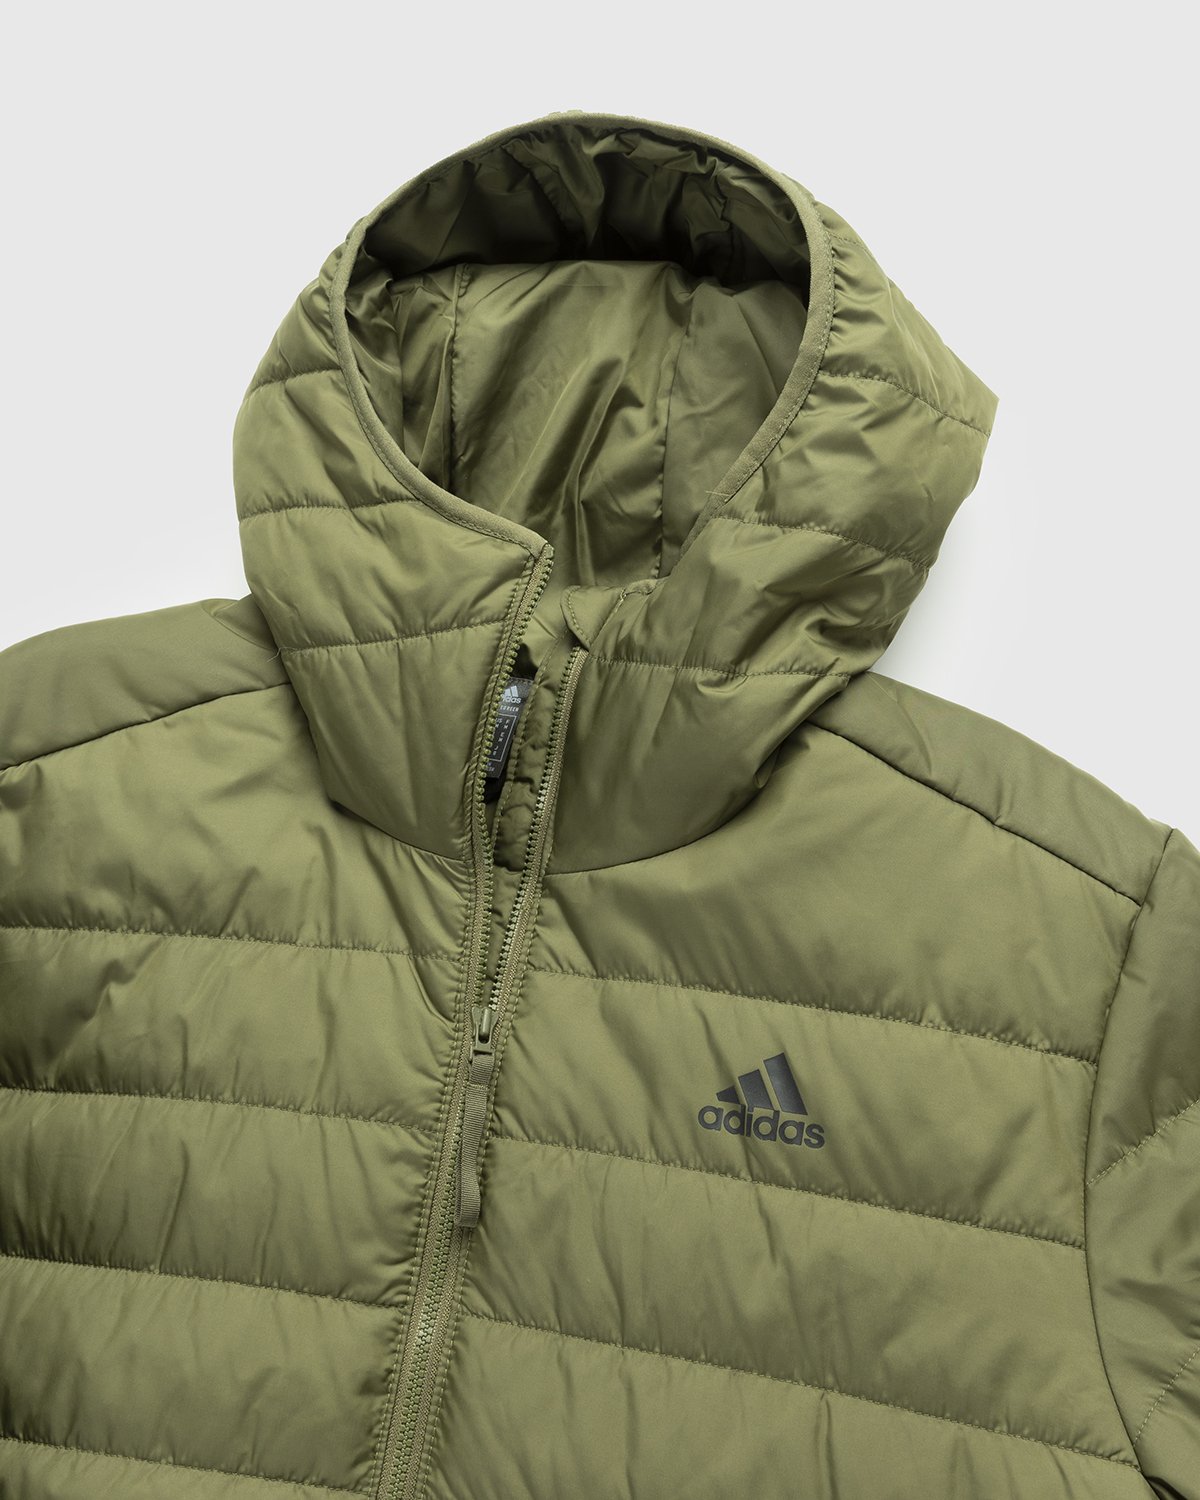 Adidas - Itavic 3-Stripes Midweight Hooded Jacket Olive - Clothing - Green - Image 3